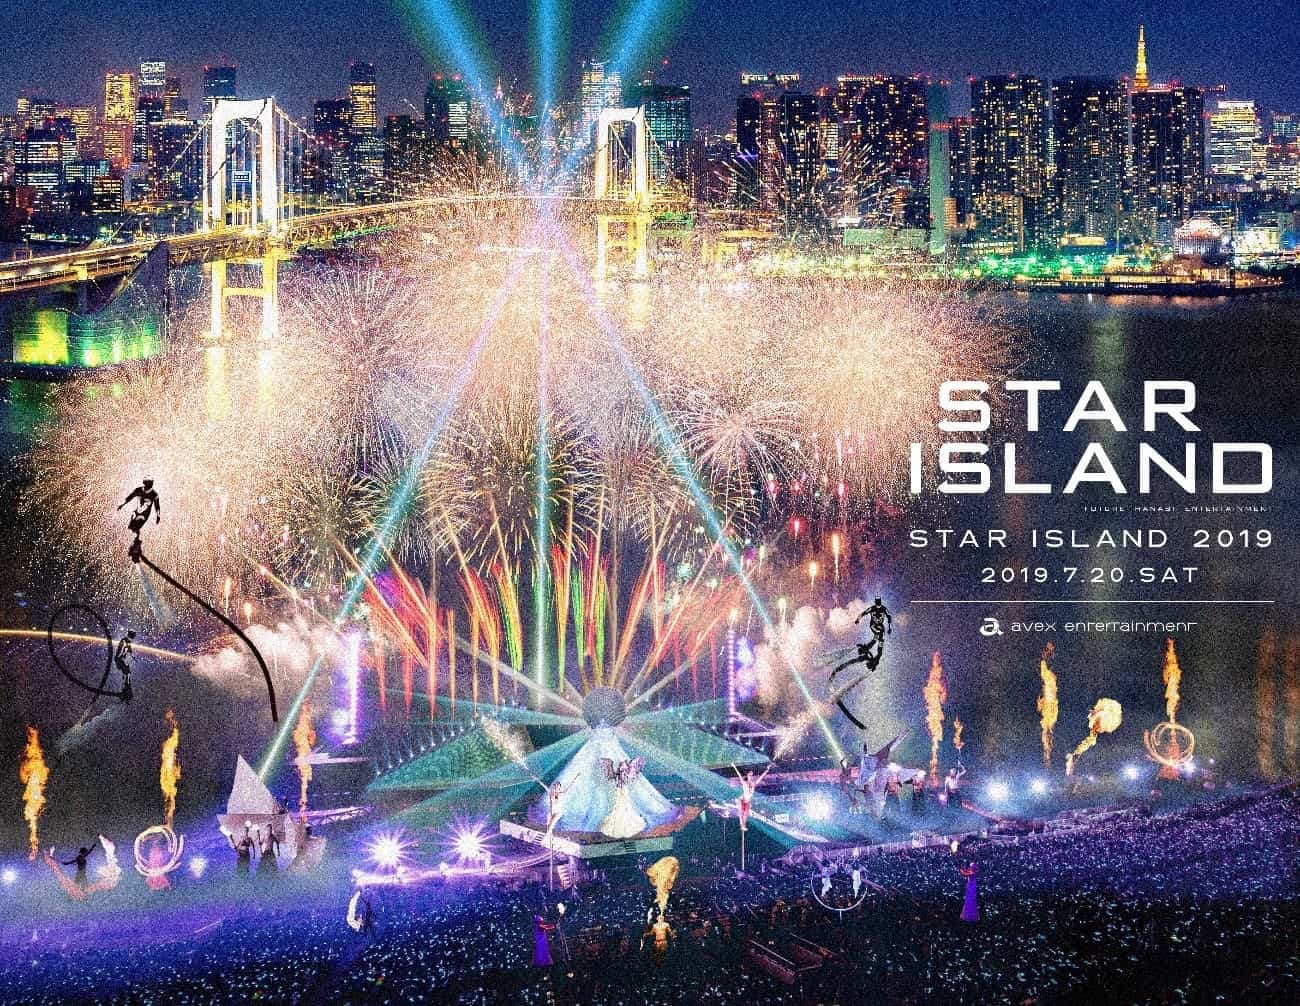 STAR ISLAND 2019 will be held at Toyosu Gururi Park on Saturday, July 20!